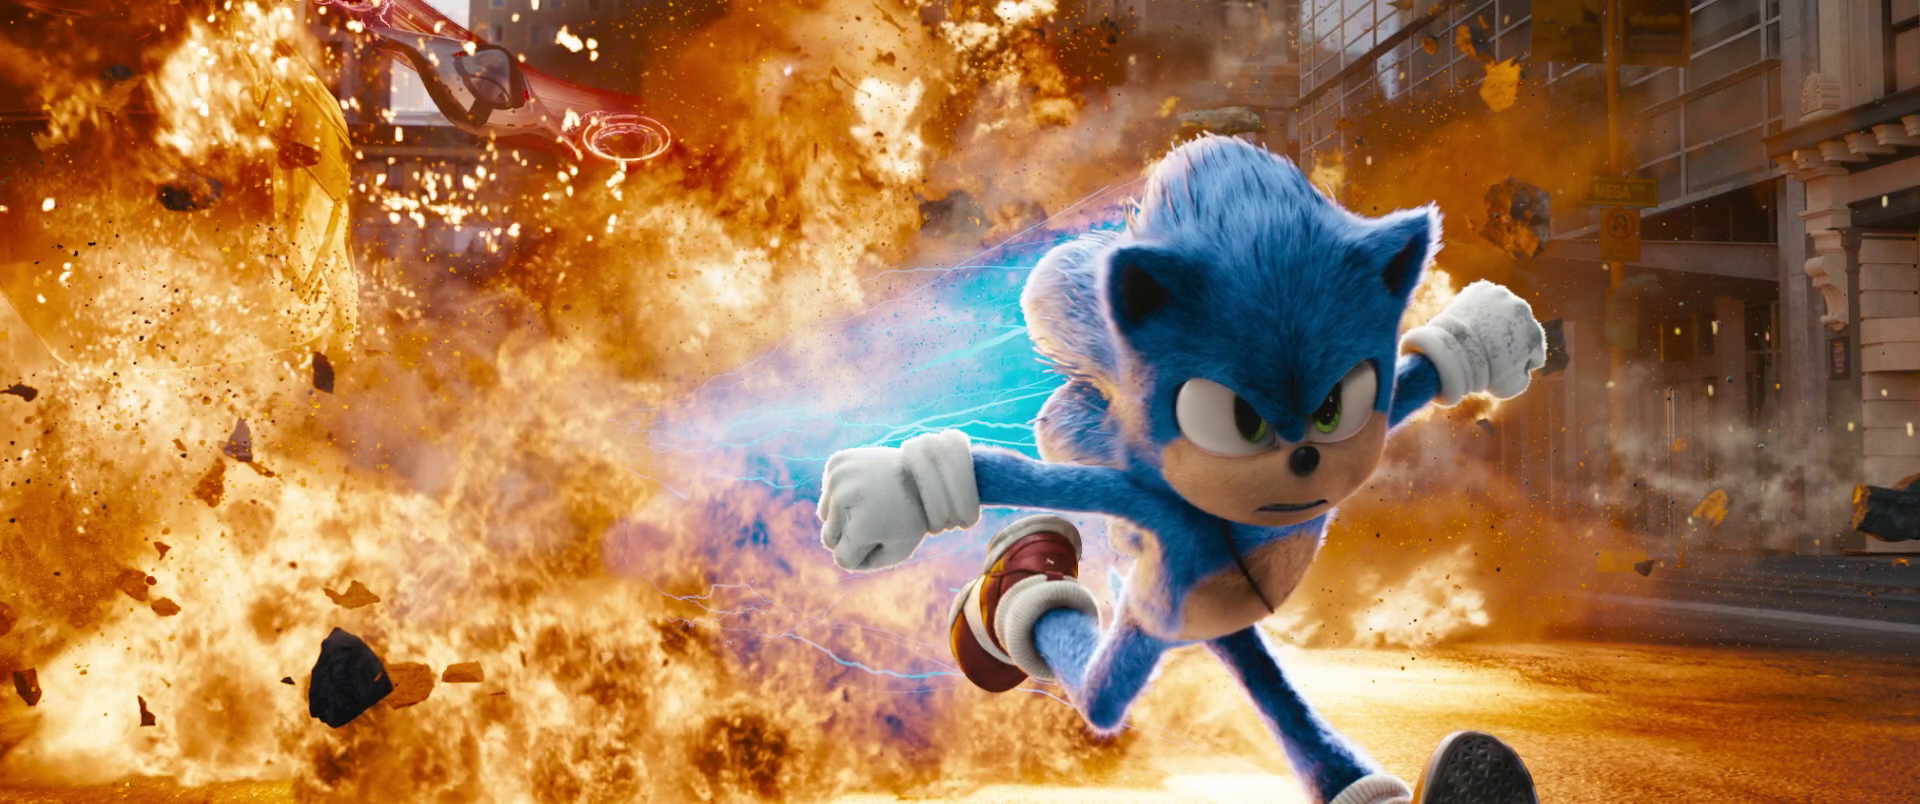 Sonic the Hedgehog (2020) WEB-DL 1080p Latino